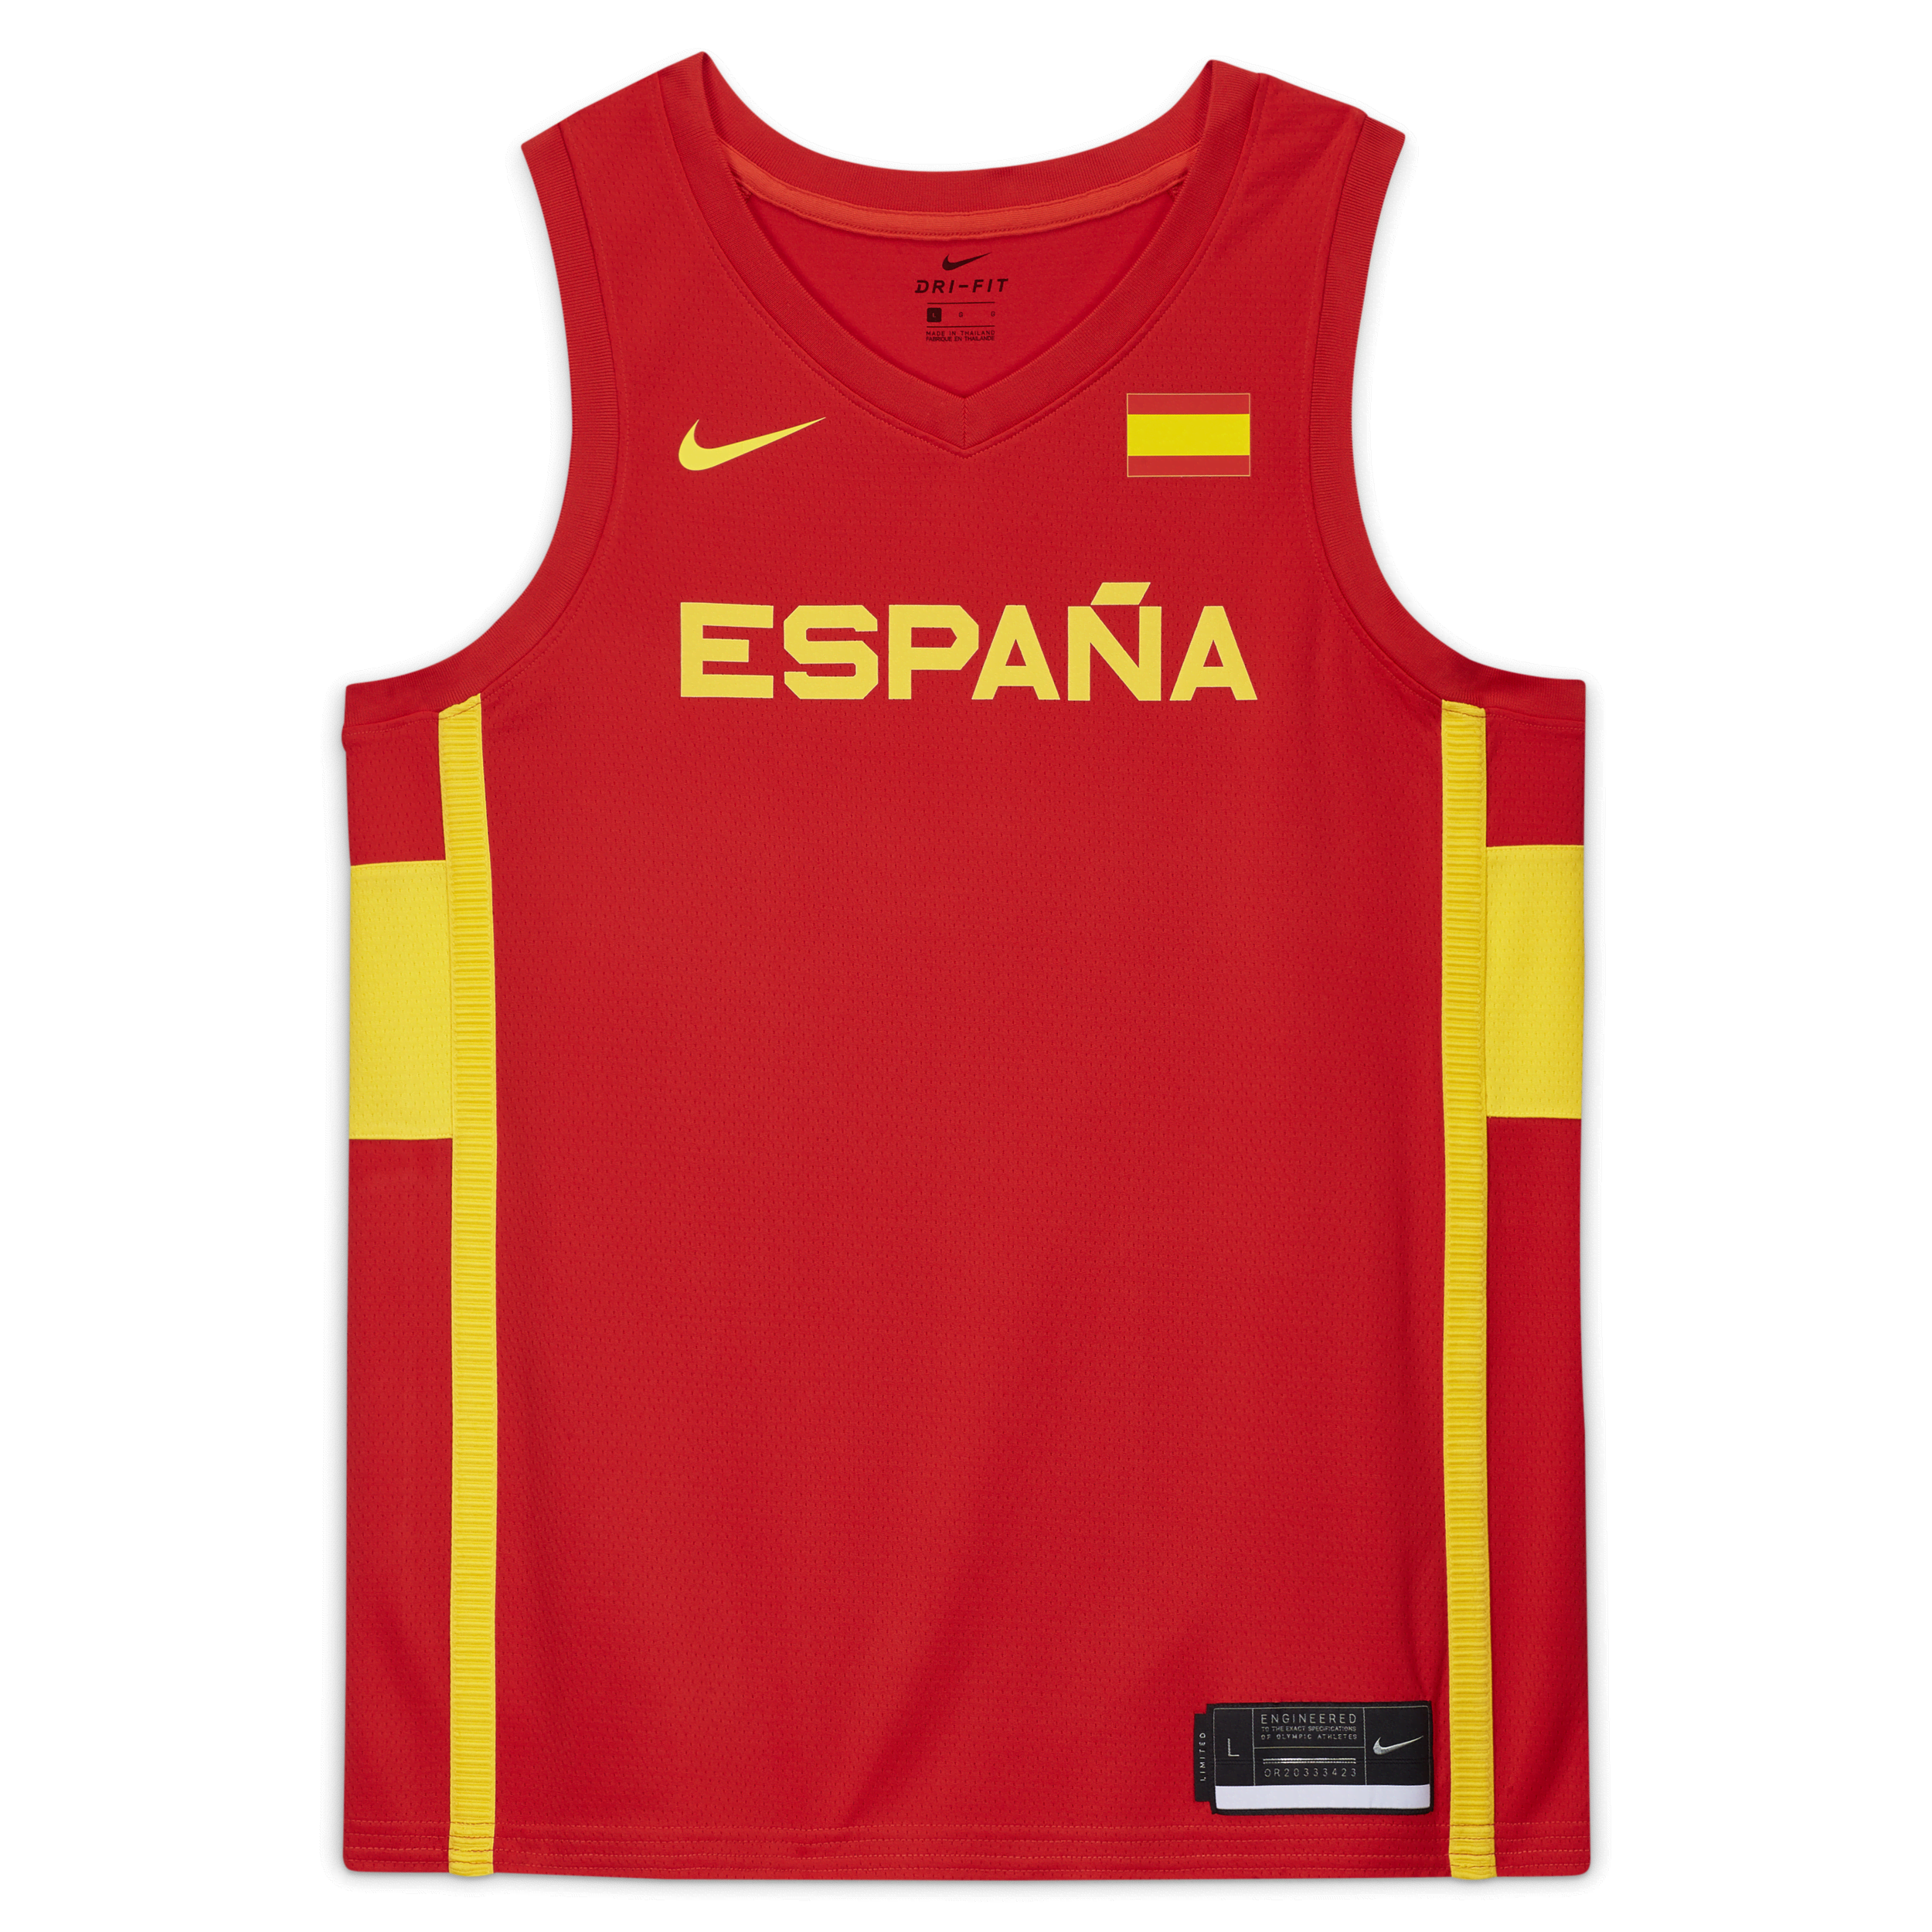 Spain Nike (Road) LimitedMen's Nike Basketball Jersey KSA. Nike